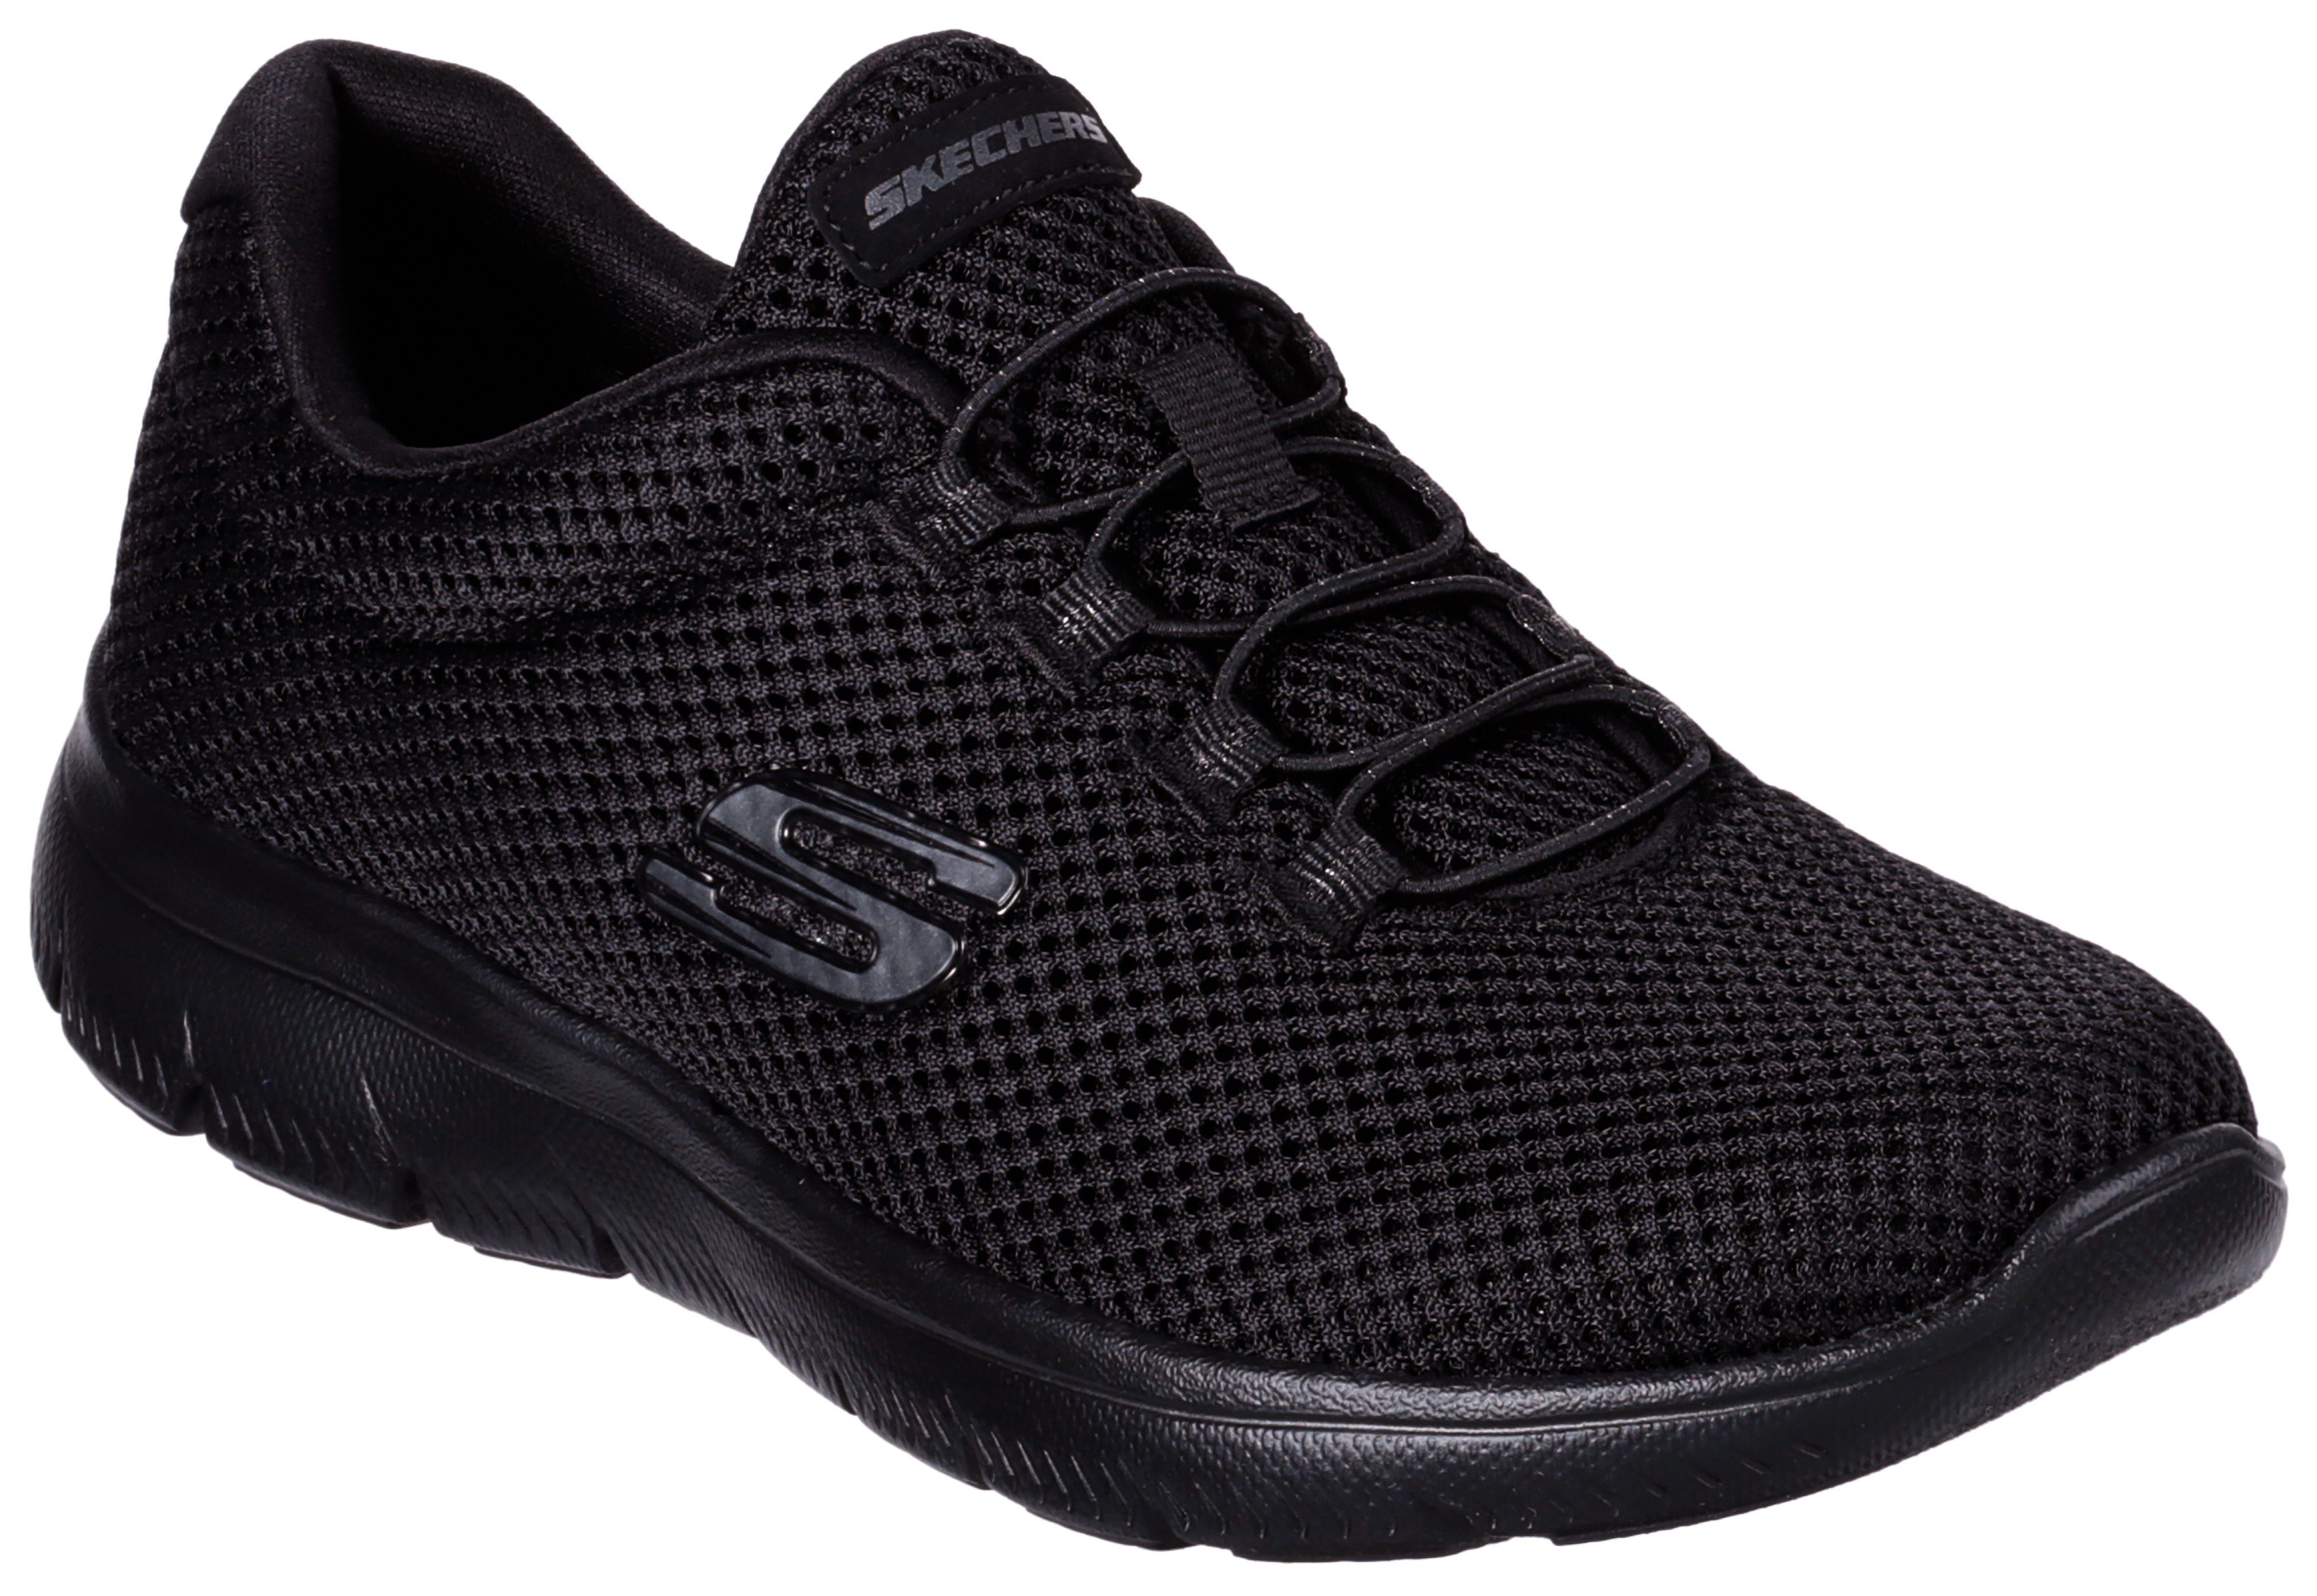 Sneaker schwarz Innensohle Slip-On mit Skechers komfortabler SUMMITS